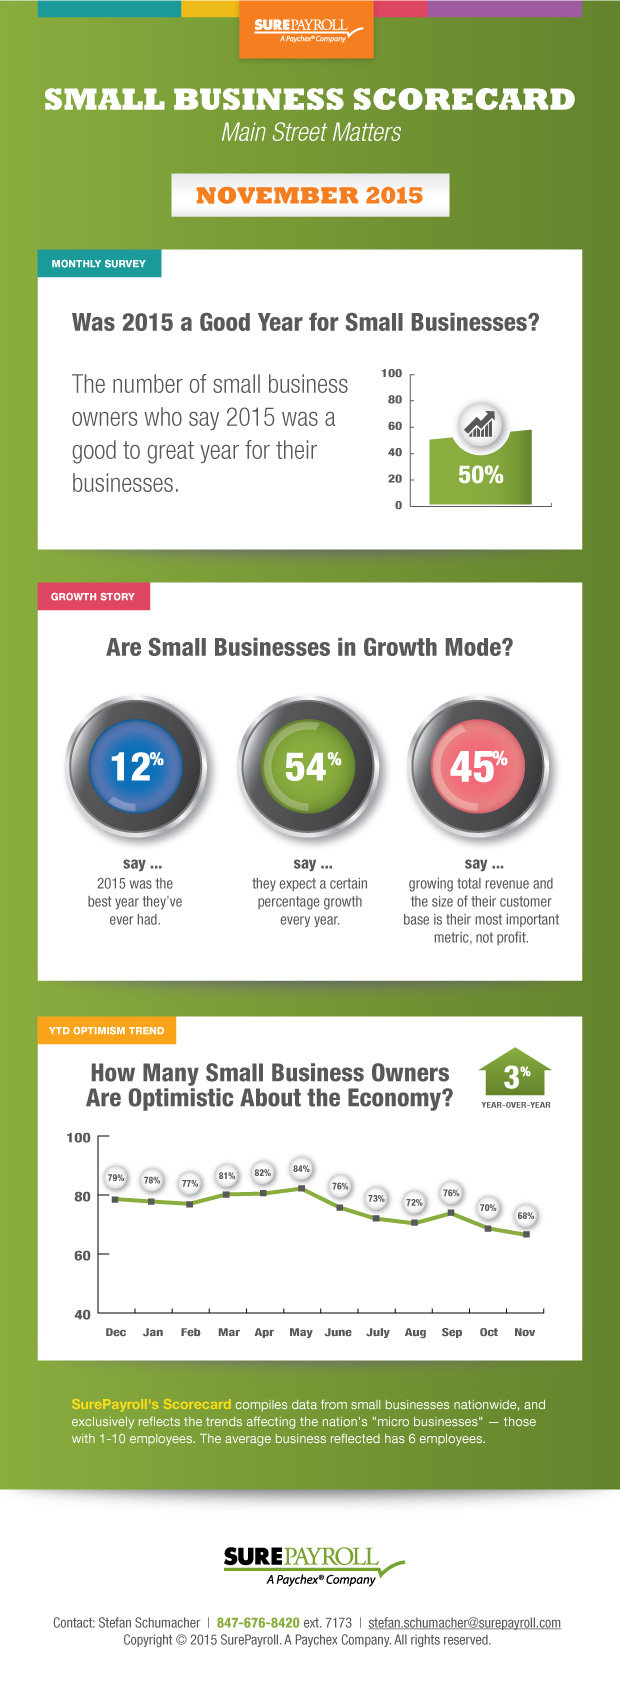 Small business scorecard - November 2015 - SurePayroll infographic